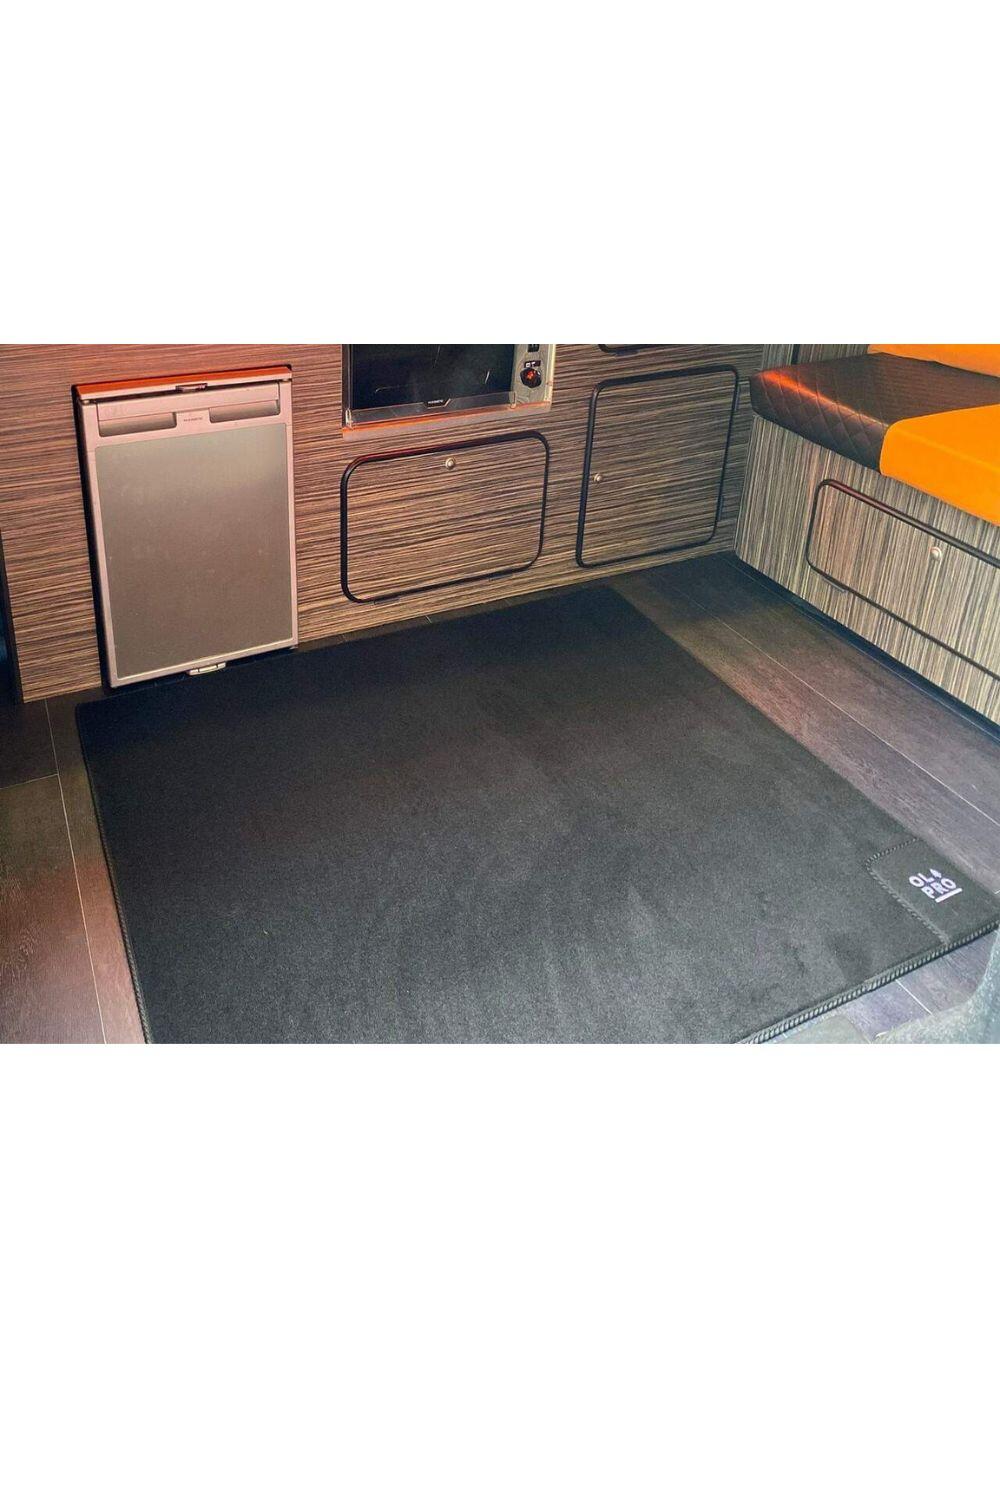 OLPRO Rear Campervan Living Area Carpet 1m x 1m 1/4